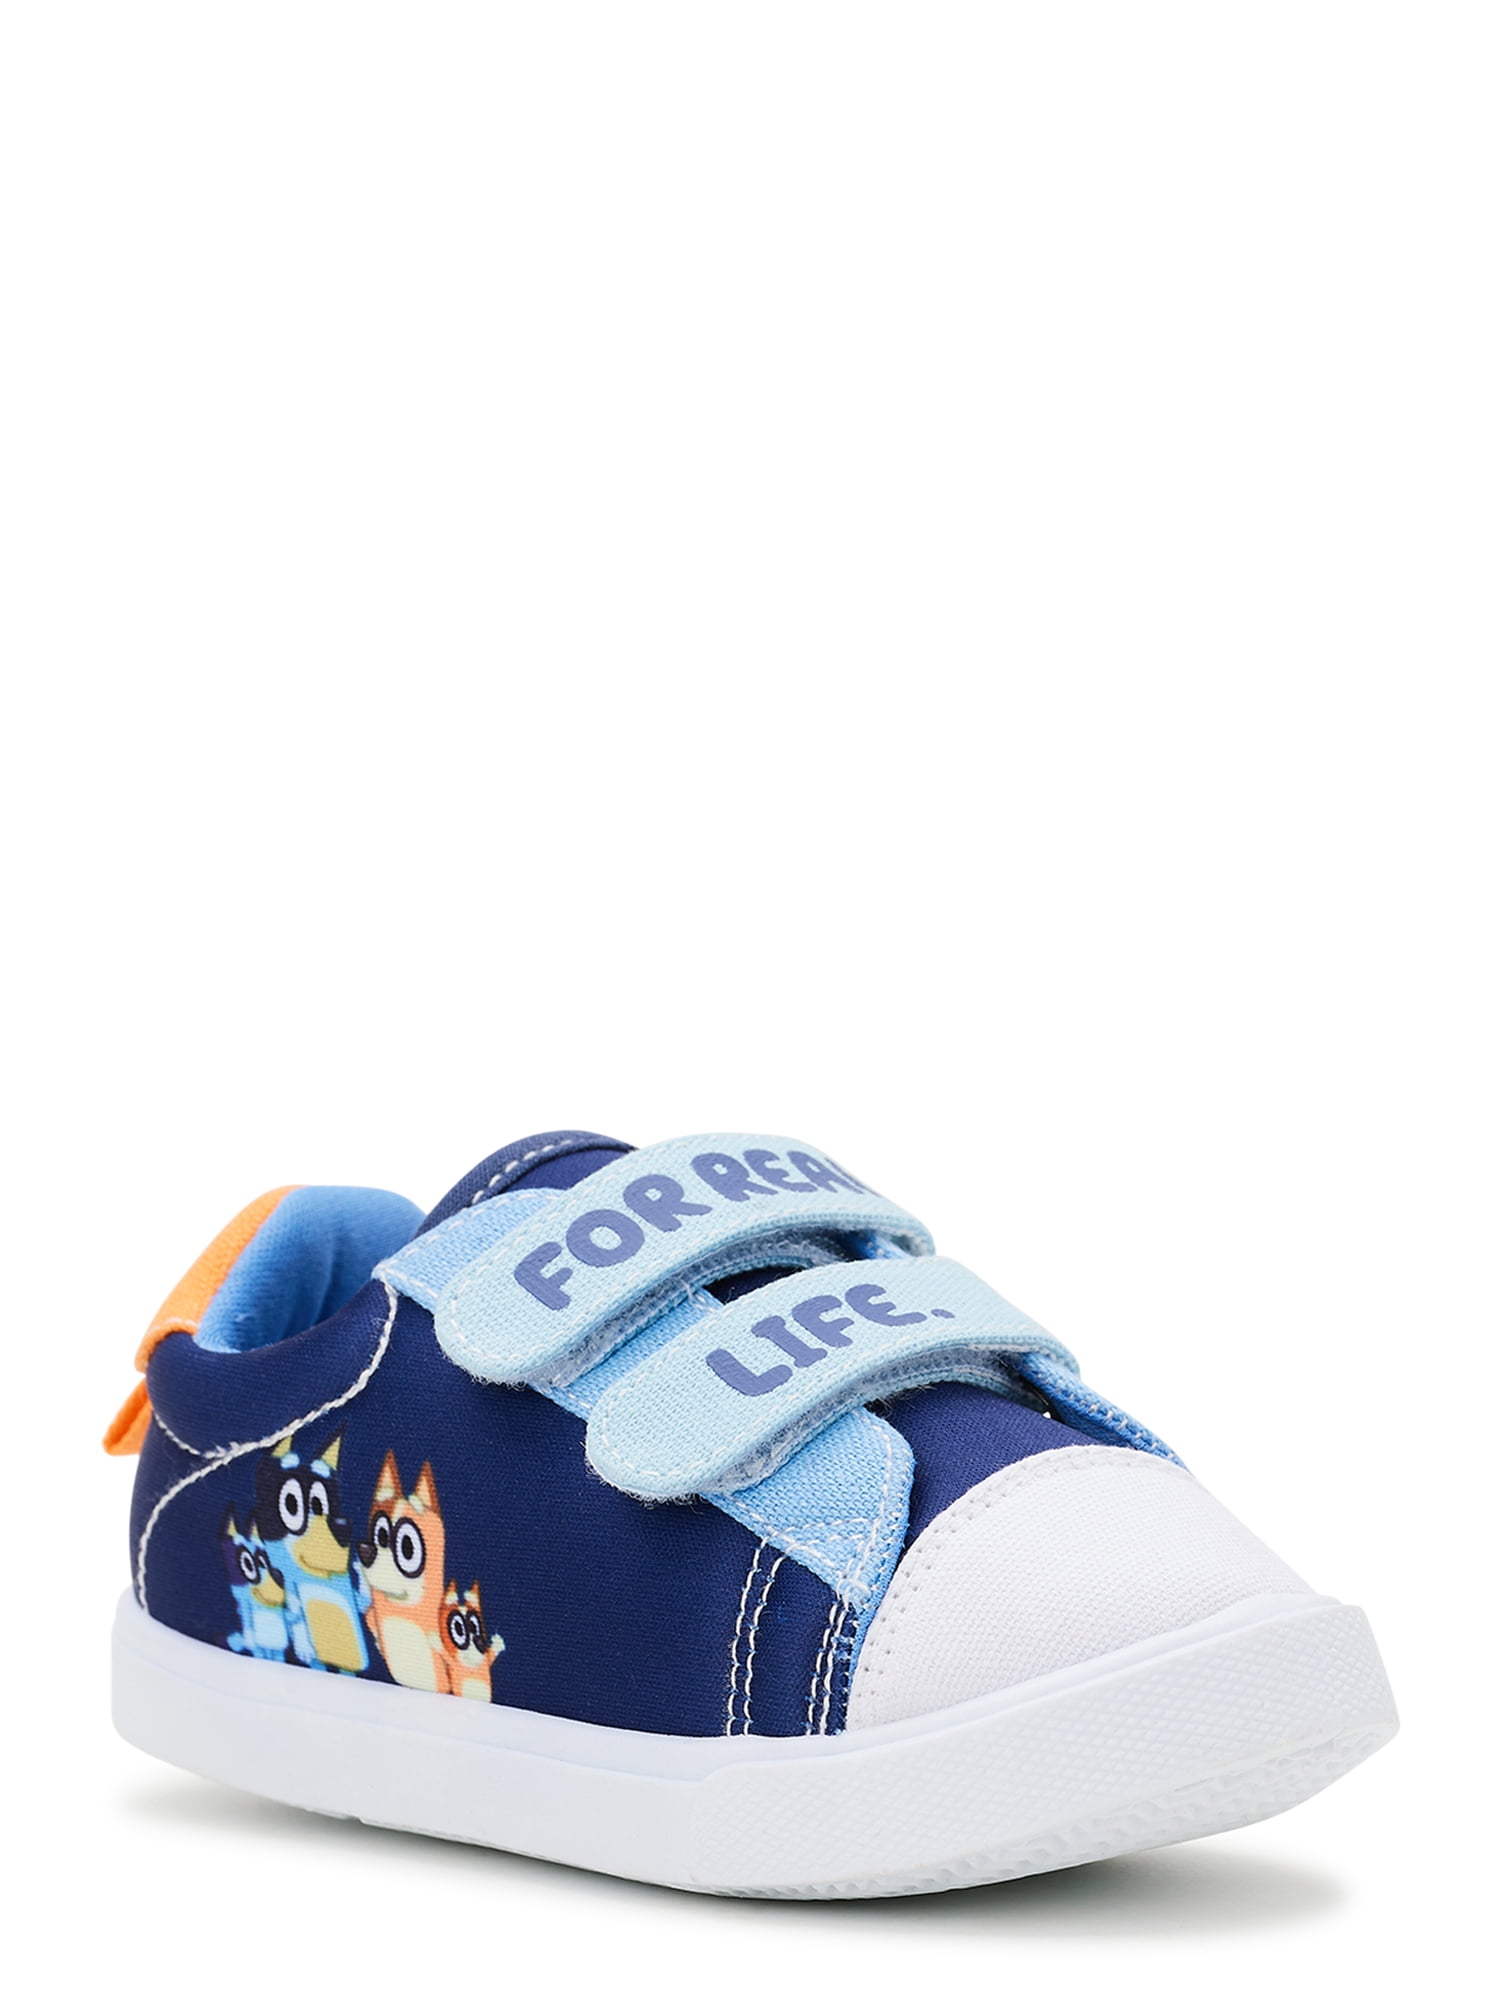 Bluey Toddler Boys Velcro Low Top Casual Shoe, Sizes 5-10 - Walmart.com